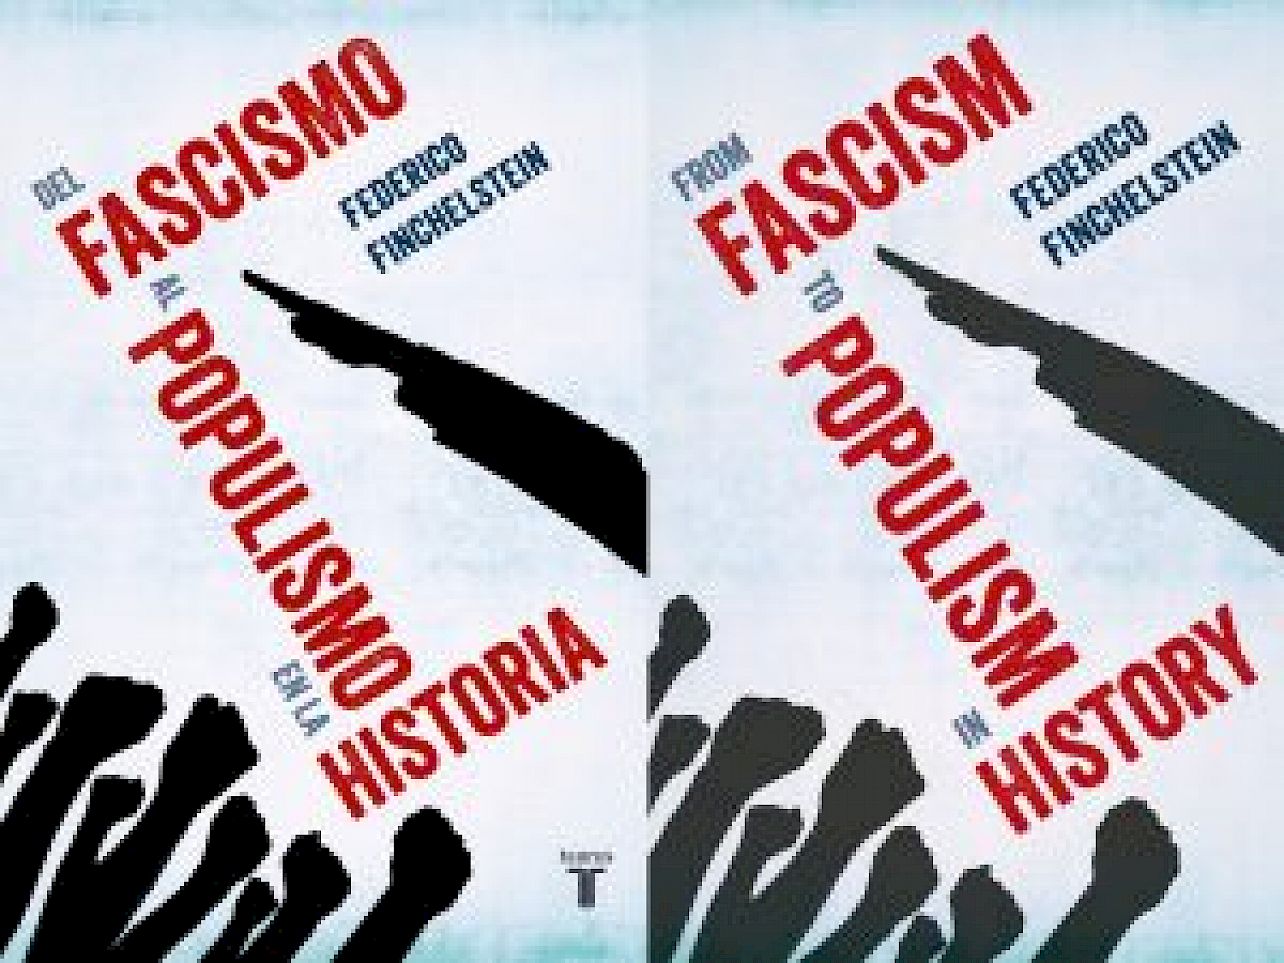 Federico Finchelstein, Del Fascismo al Populismo en la Historia (Taurus) and From Fascism to Populism in History (University of California Press, 2017).